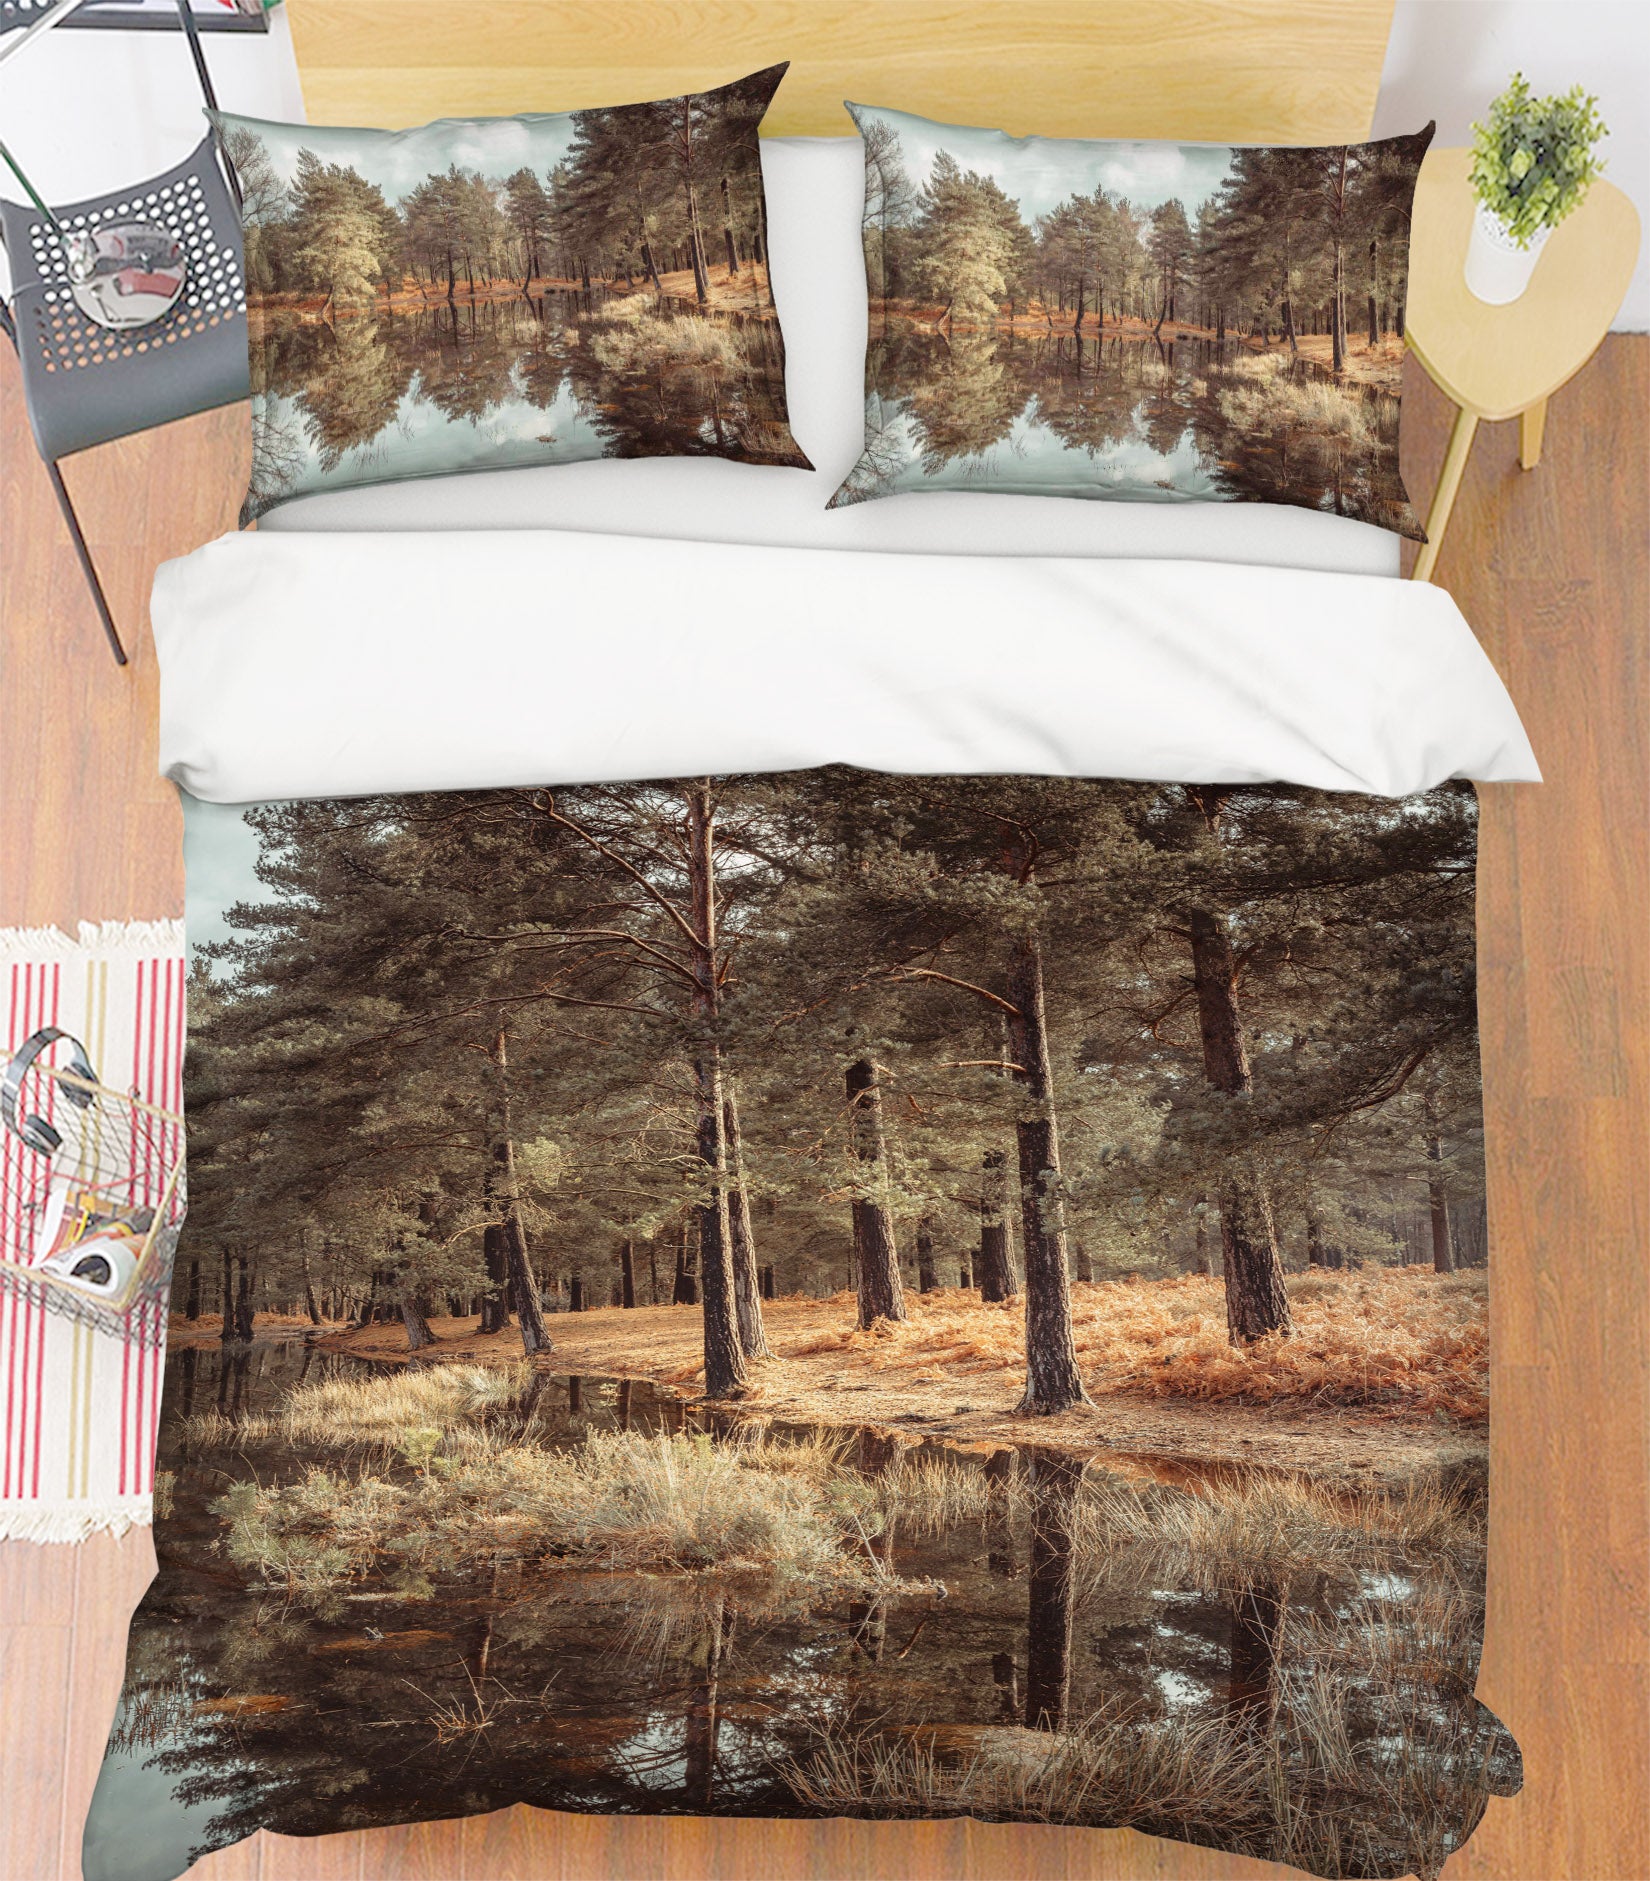 3D Forest Scenery 7171 Assaf Frank Bedding Bed Pillowcases Quilt Cover Duvet Cover